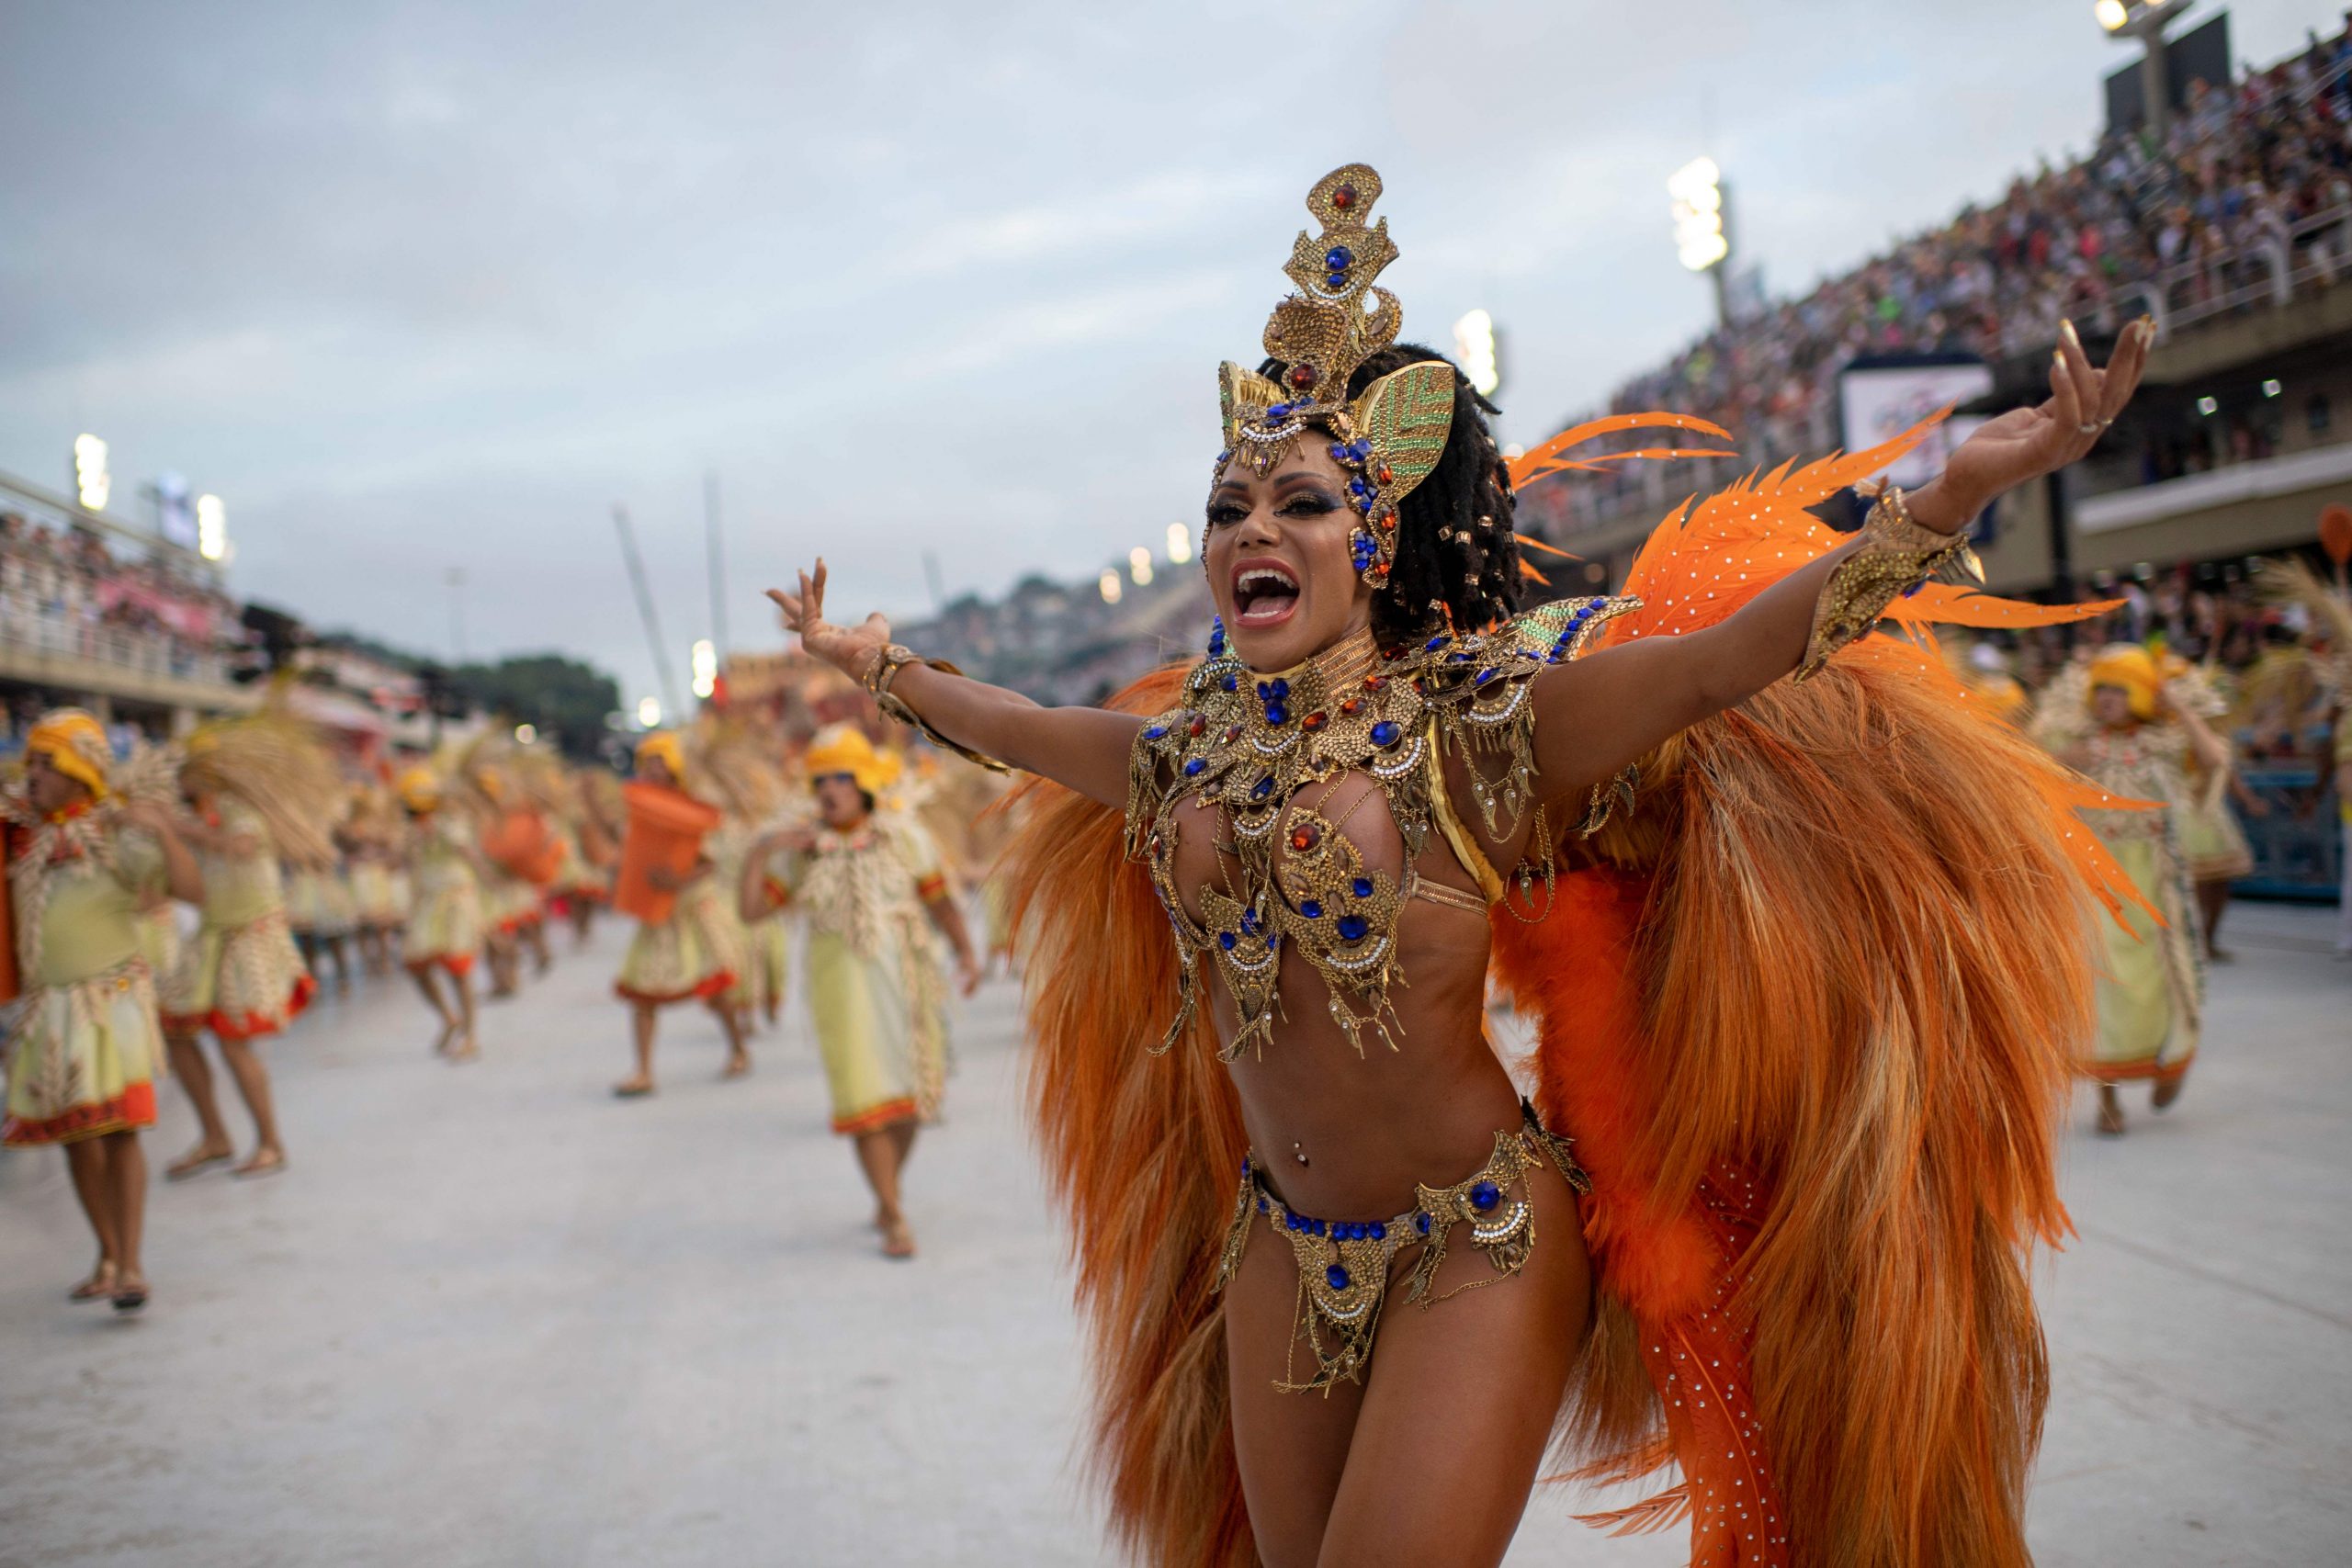 Carnevale in Brasile: non solo Rio